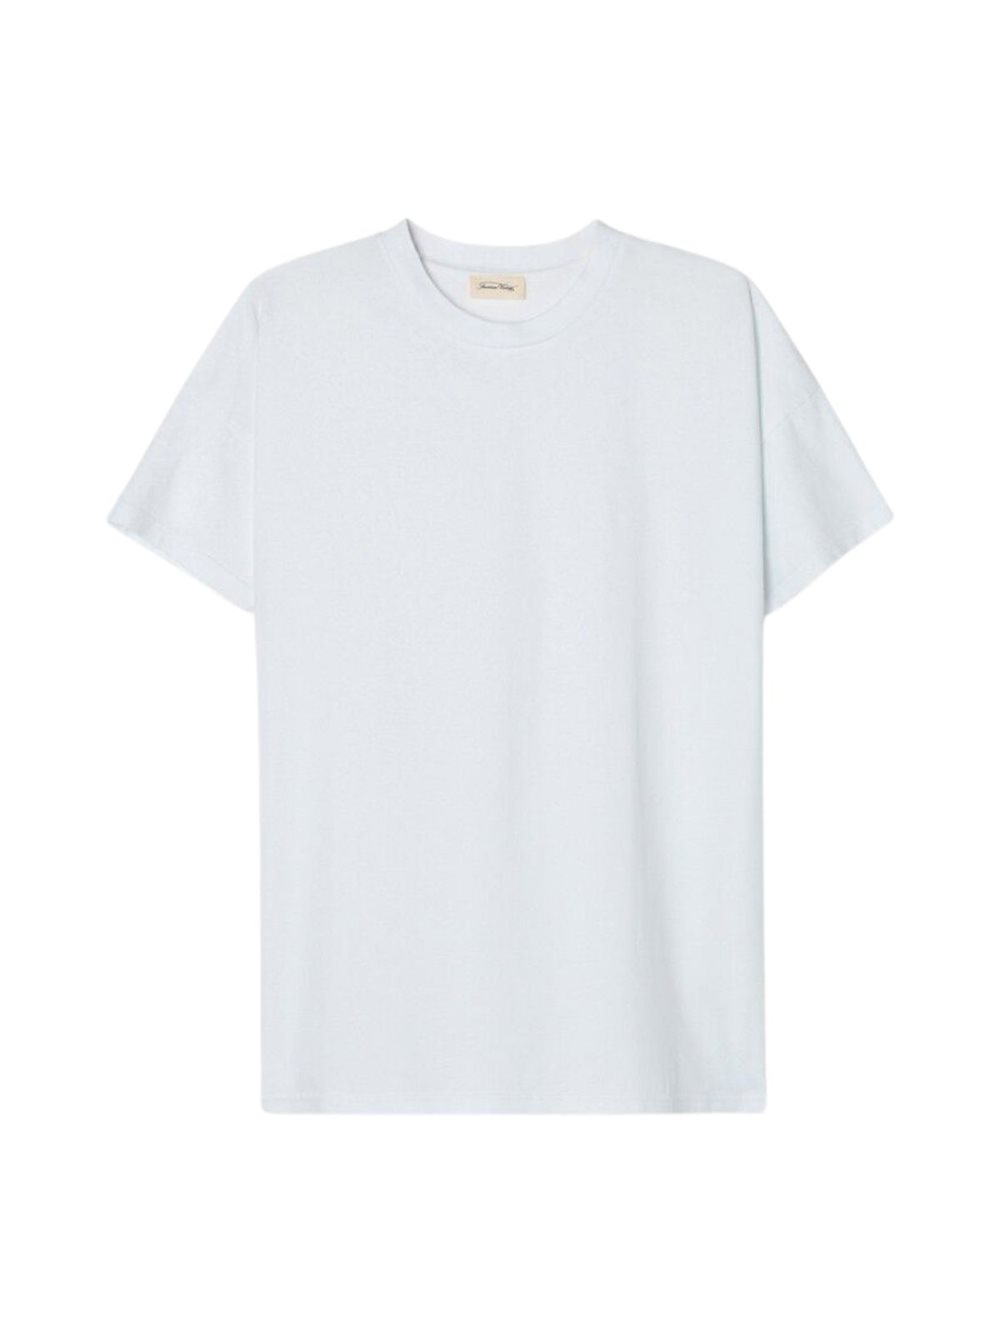 Fizvally T-Shirt White Unisex